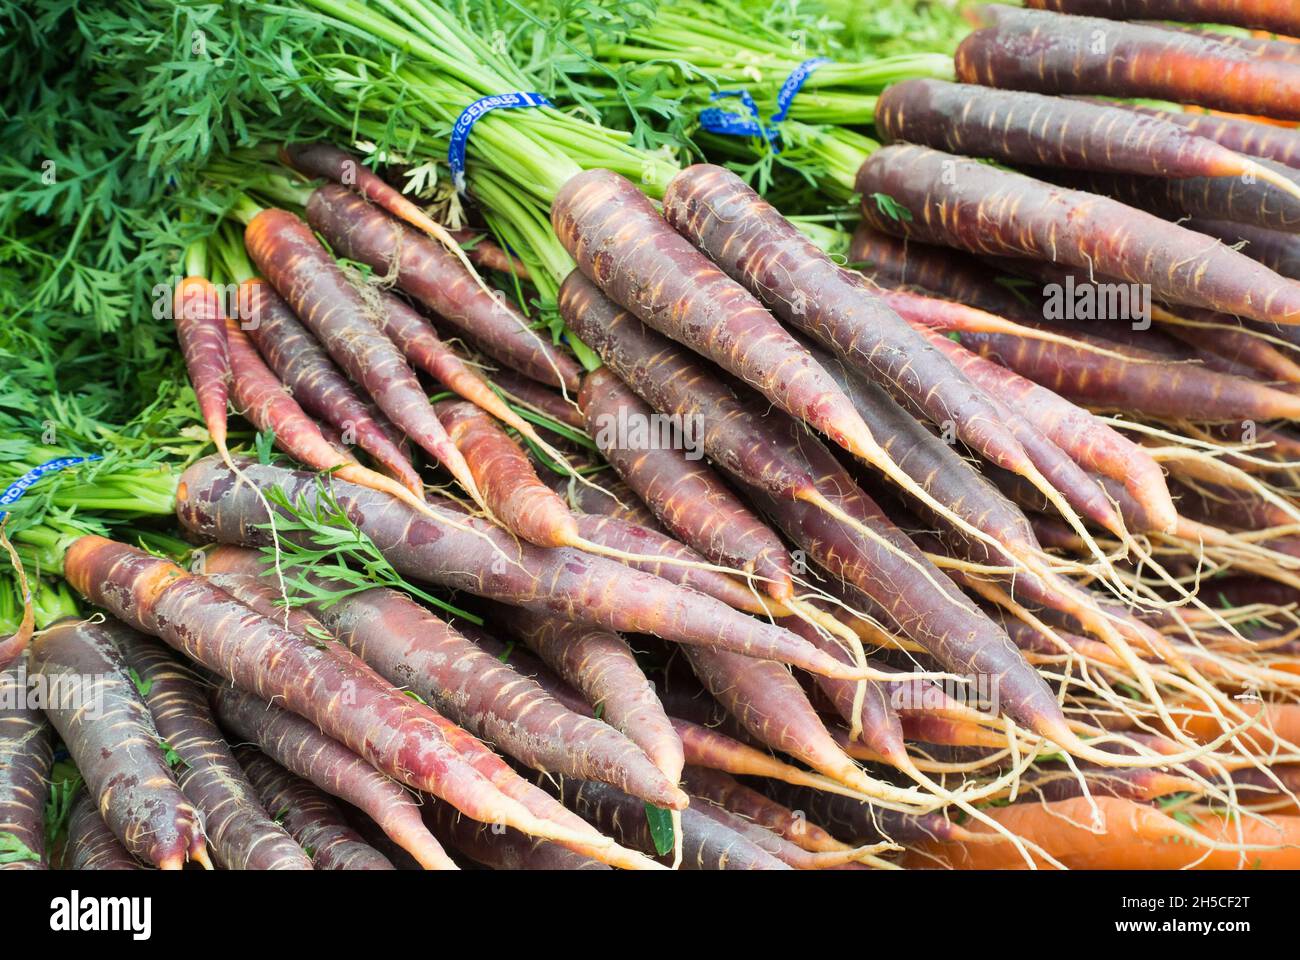 Purple Carrots on Display at Farmer's Market Stock Photo